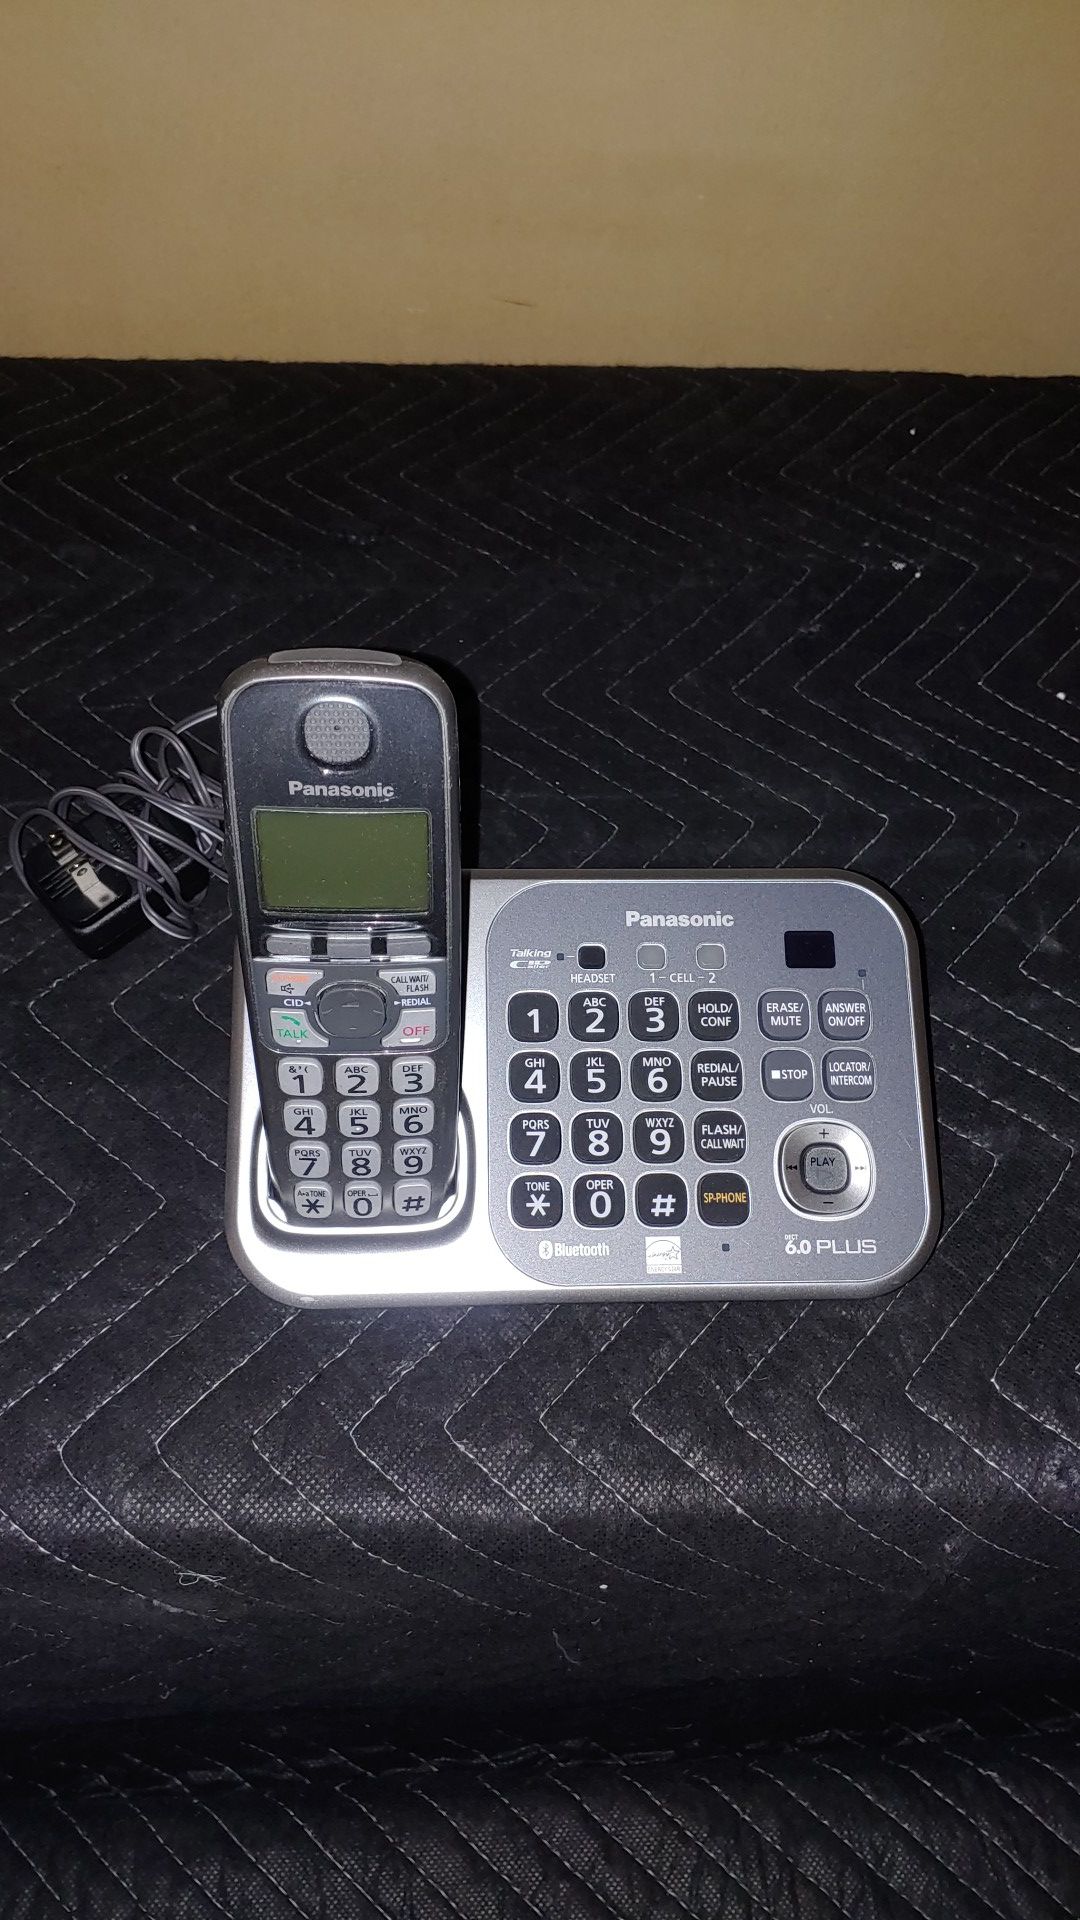 Panasonic model #KX-TG77041 cordless phone DECT 6.0 Plus Bluetooth with answering machine